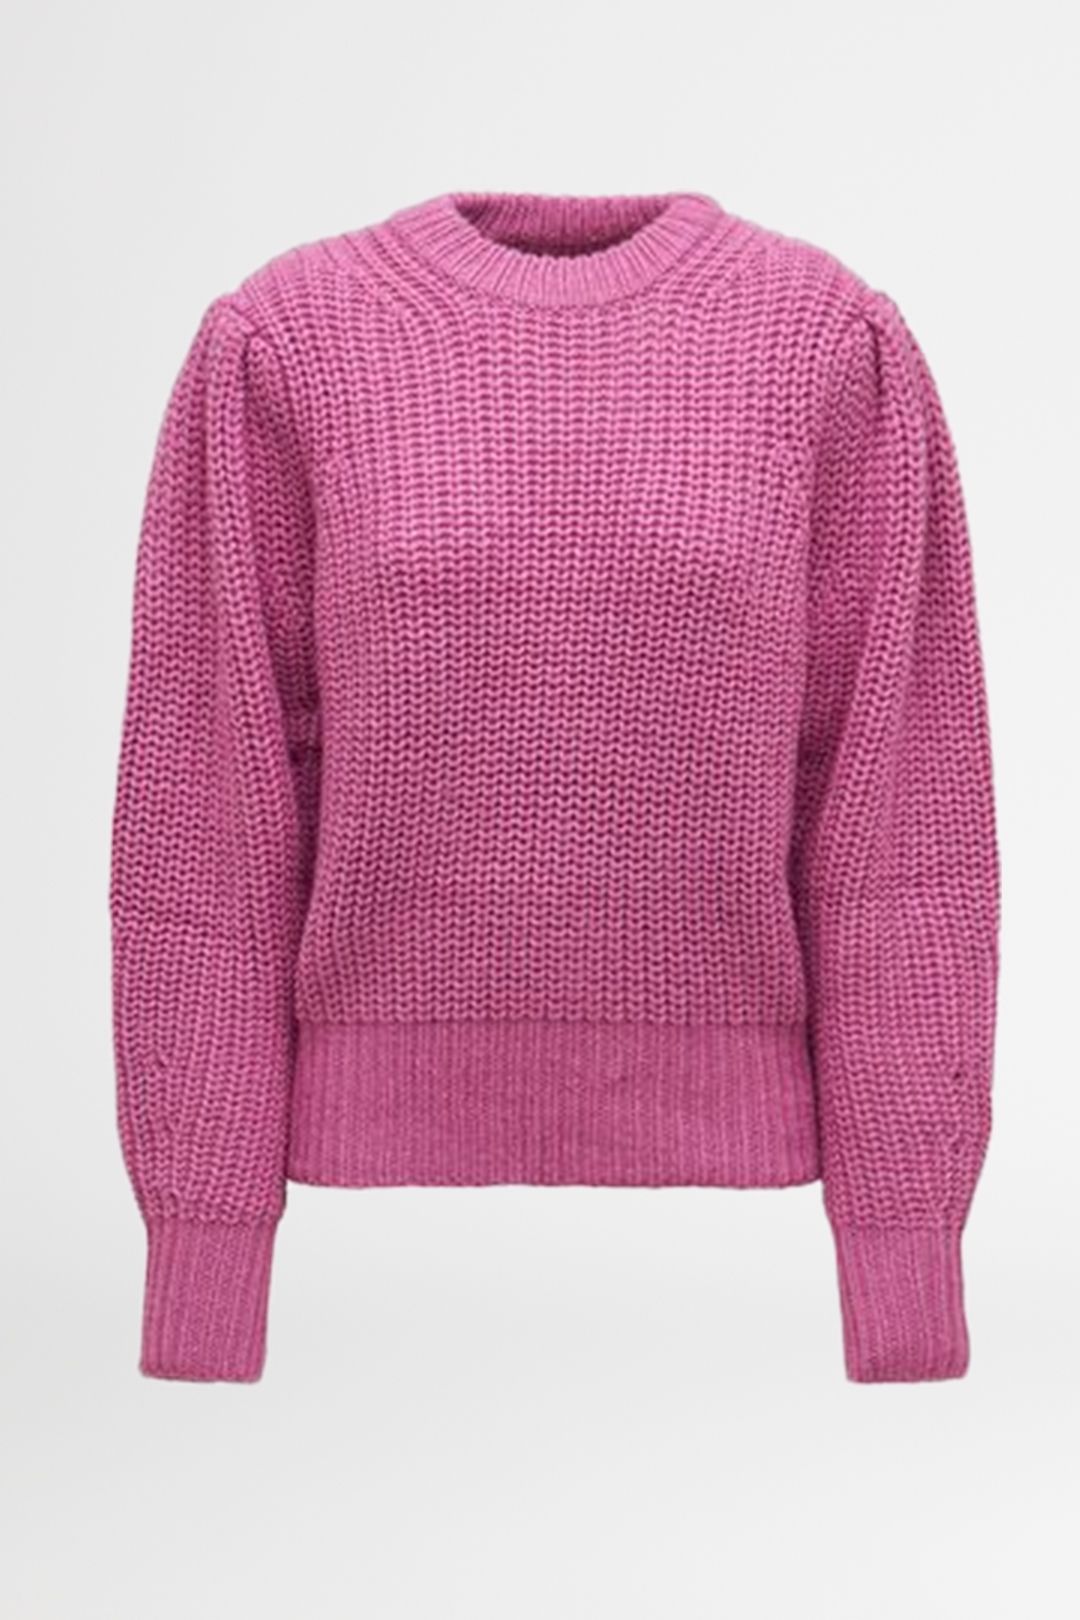 Isabel Marant Pleane Wooly Knit Pink